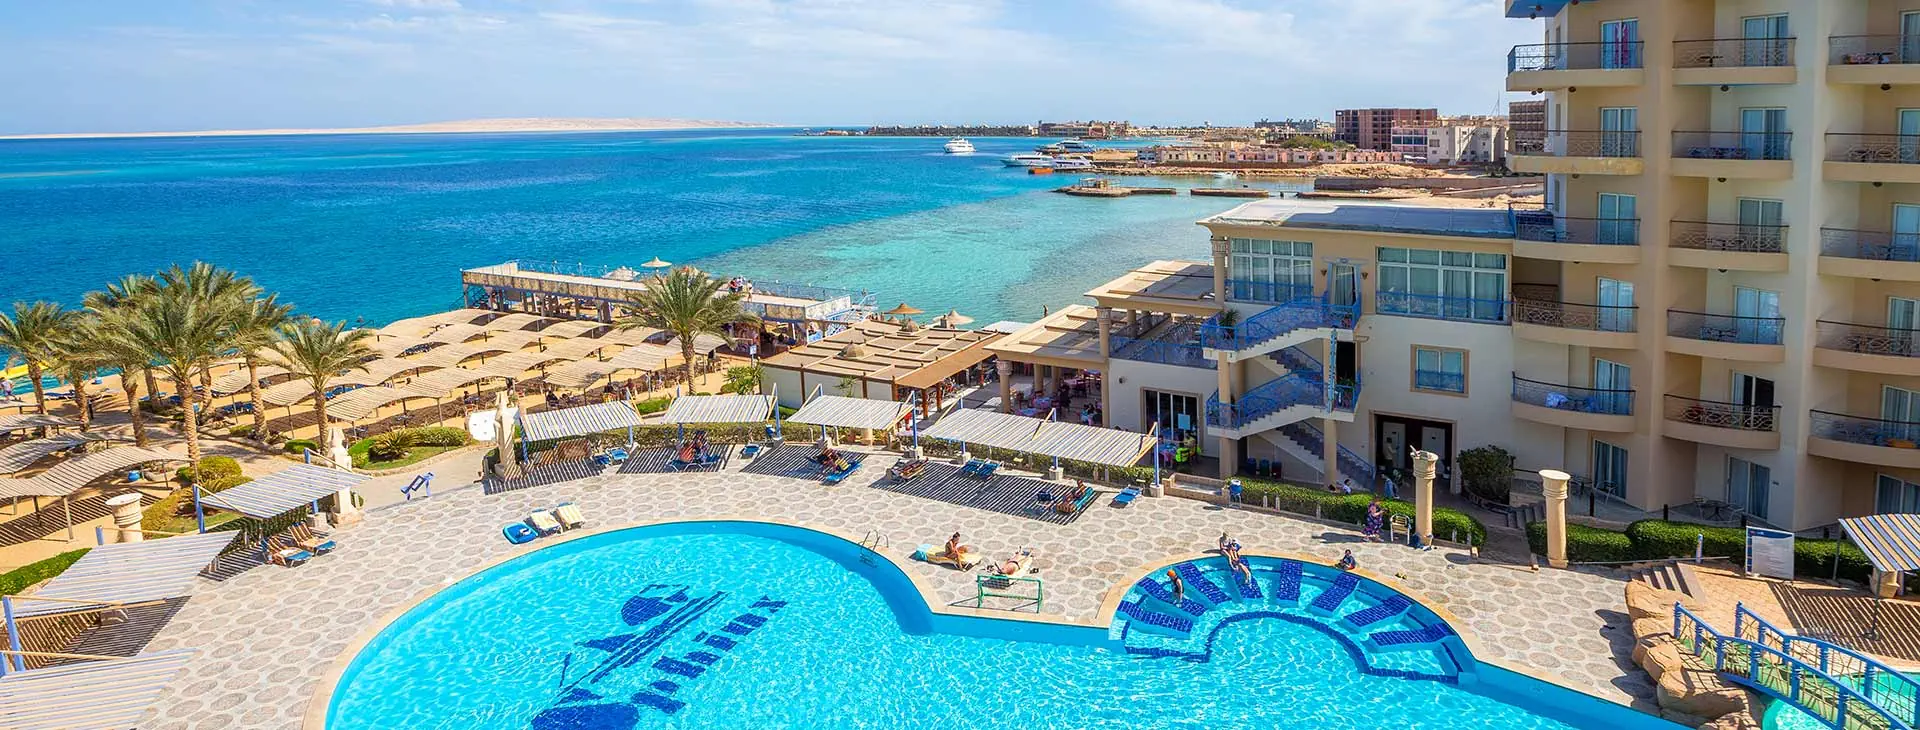 Egipt Hurghada Hurghada King Tut Aqua Park Beach Resort